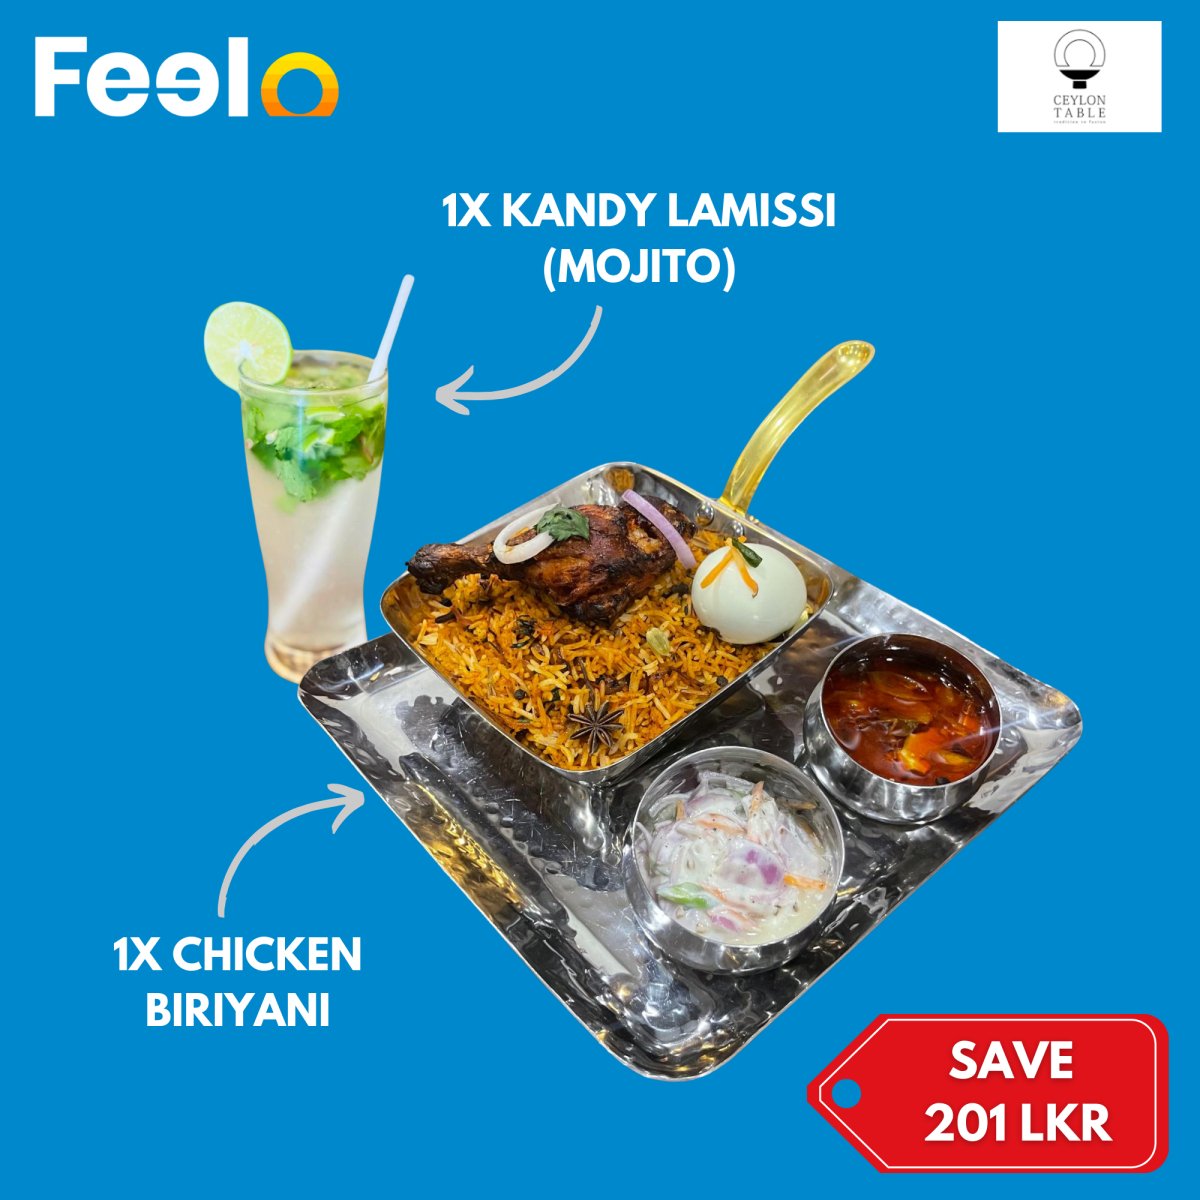 Delicious 1x Chicken Biriyani + 1x Kandy Lamissi - Ceylon Table, Colombo 13 | Feelo